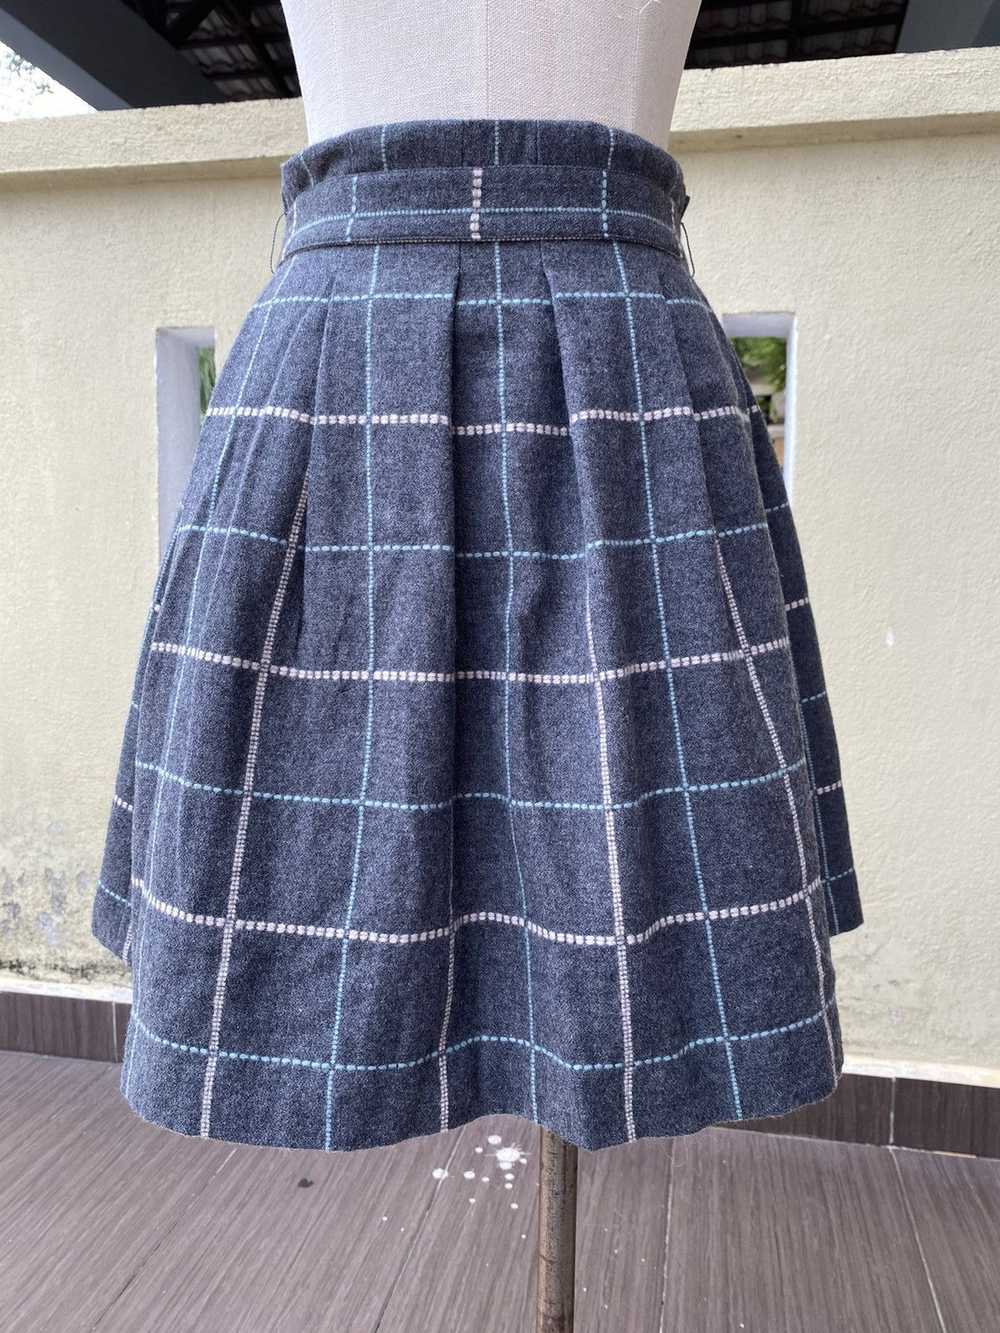 Agnes B. wool skirt - image 1